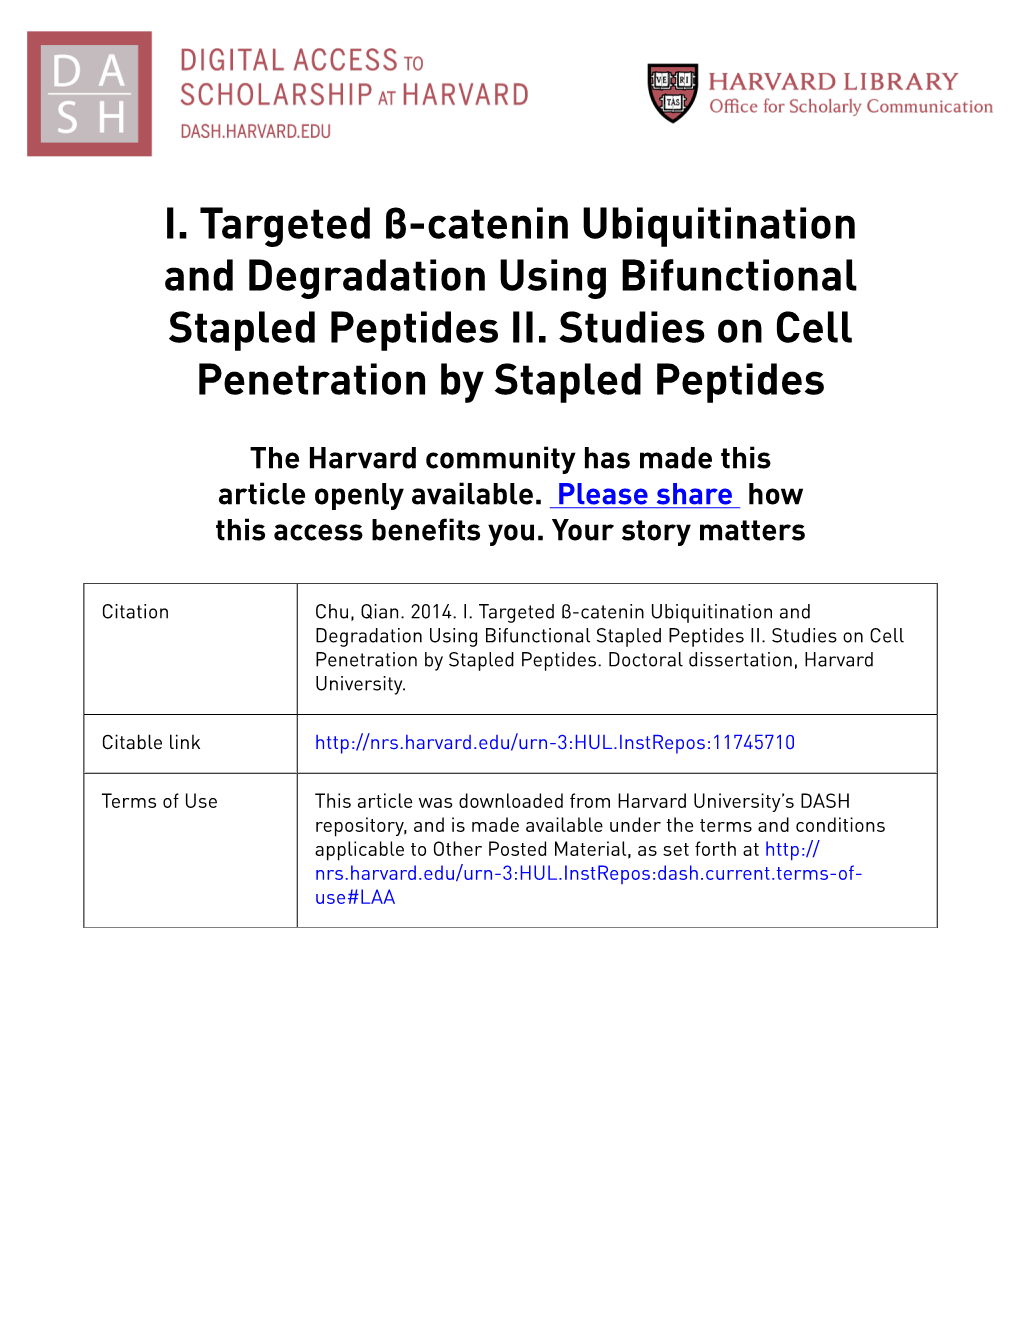 I. Targeted Β-Catenin Ubiquitination and Degradation Using Bifunctional Stapled Peptides II